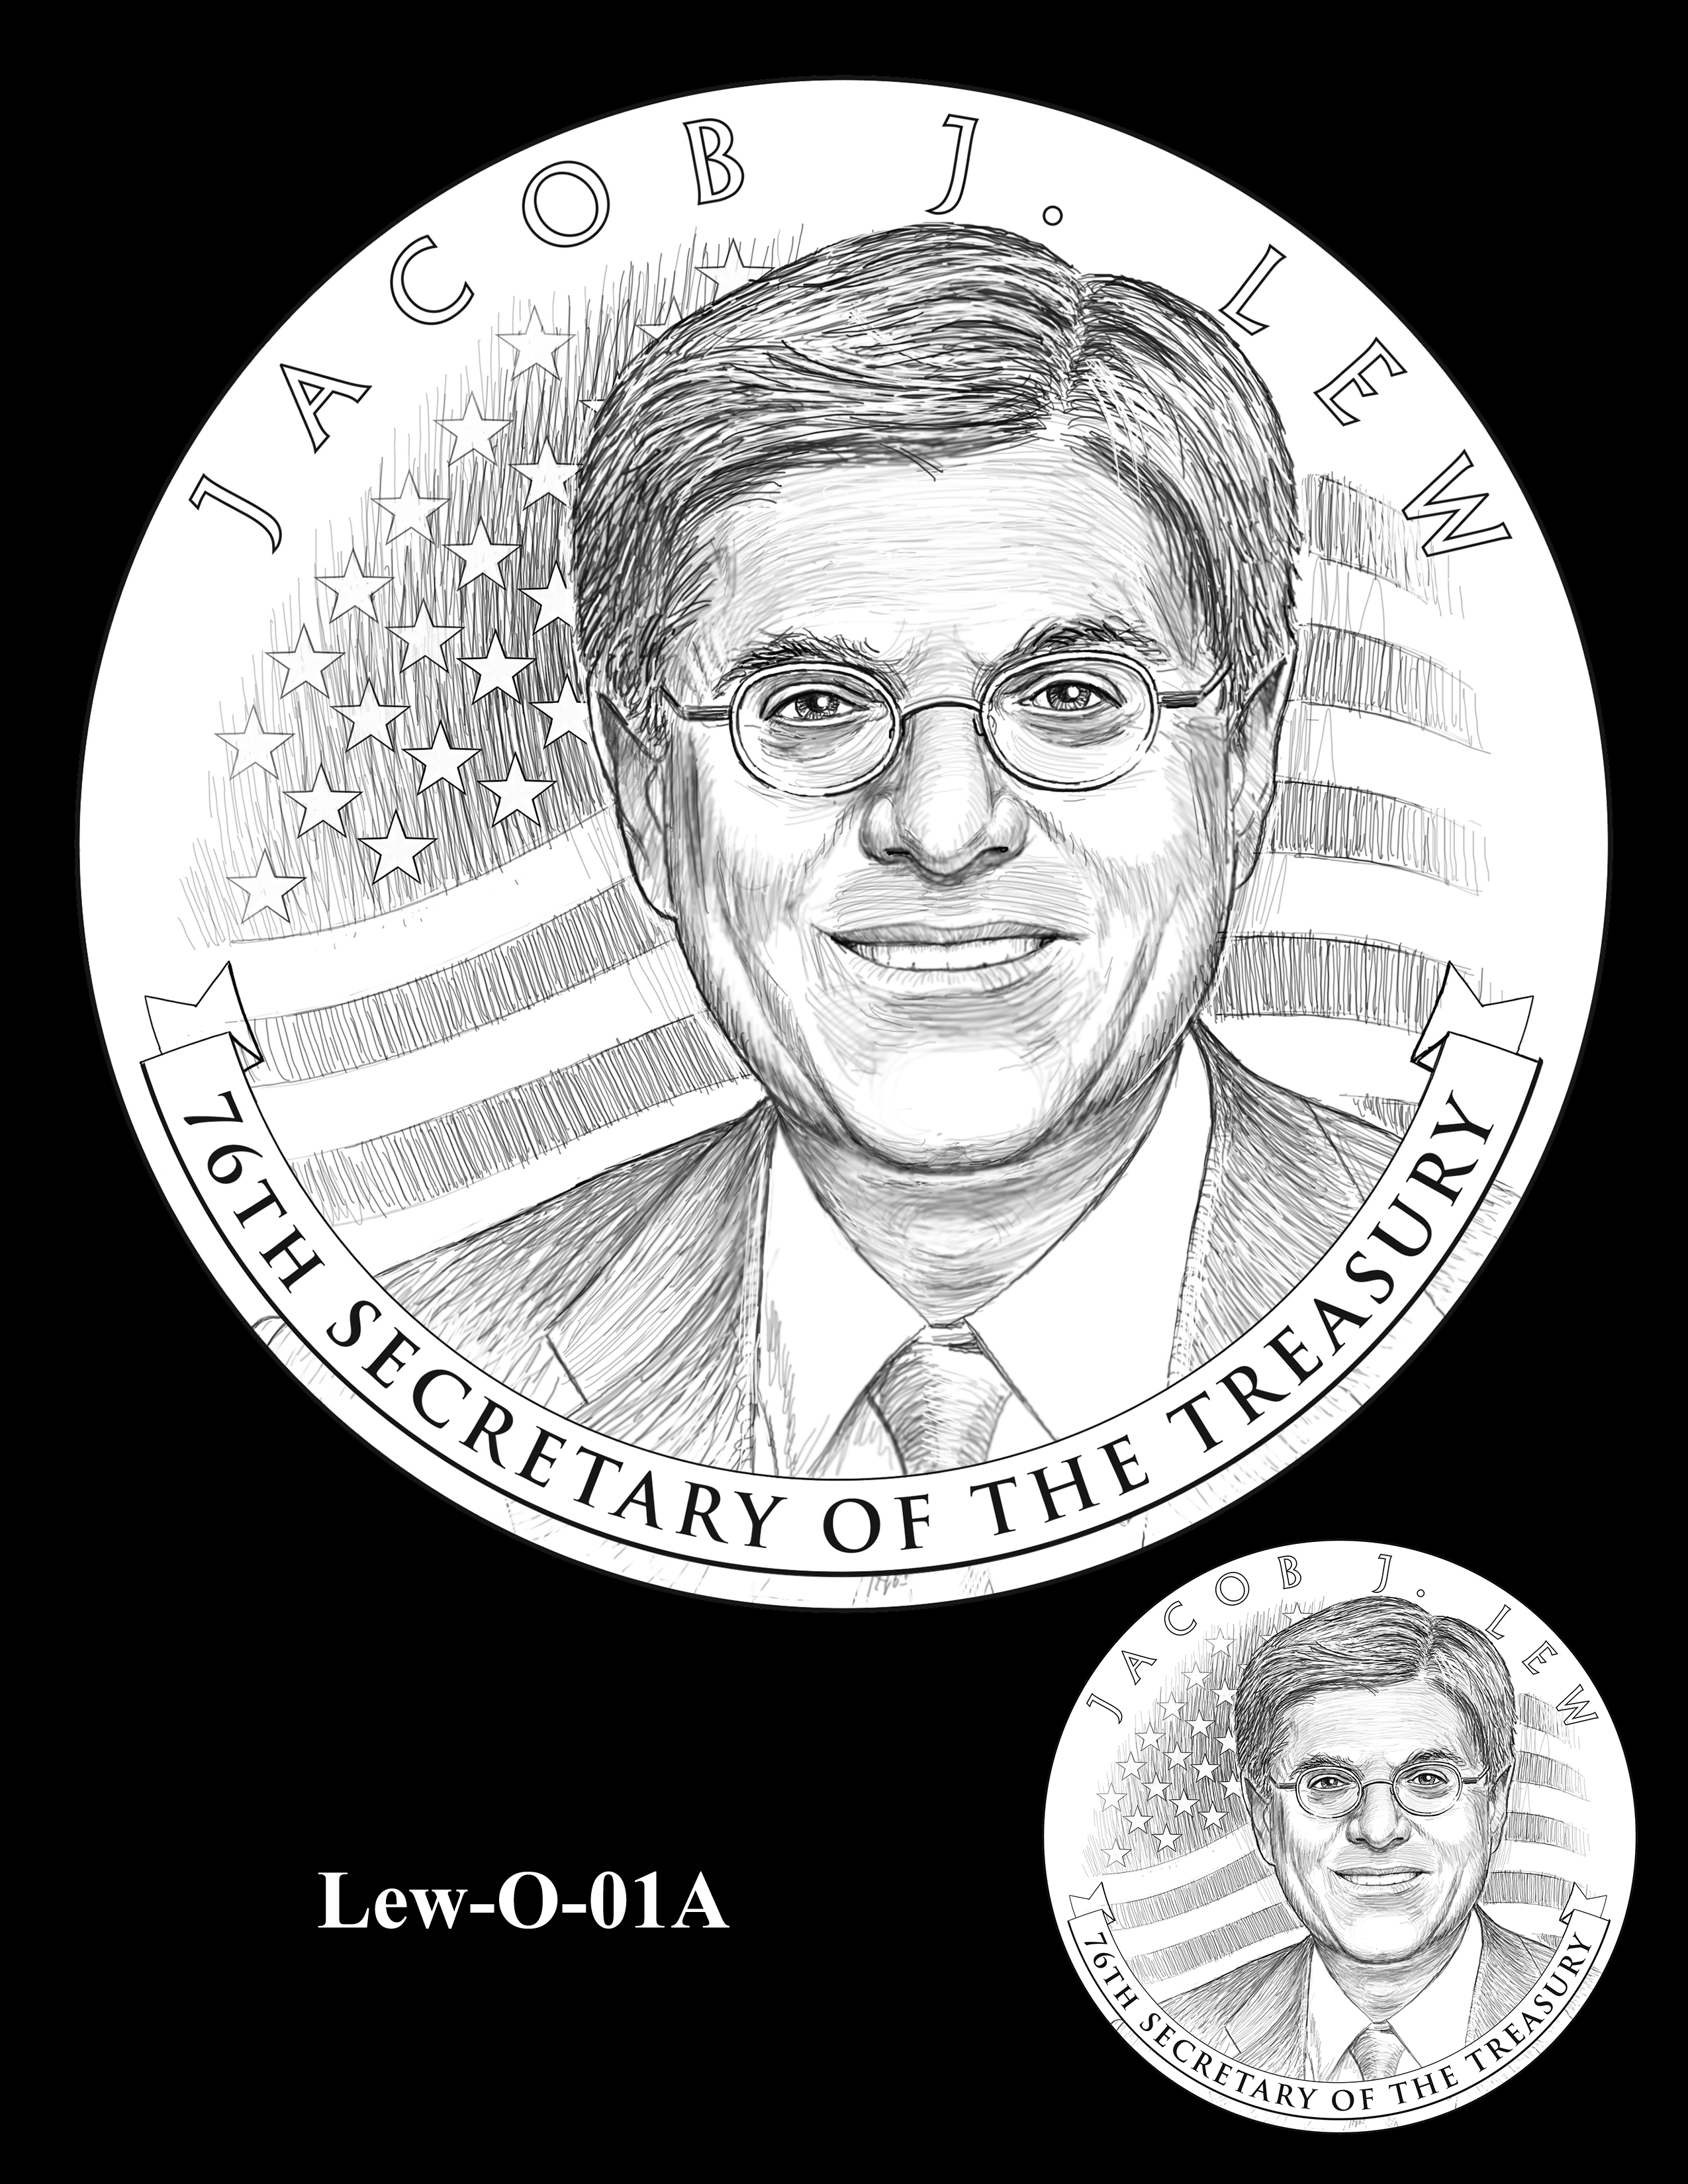 Lew-O-01A - Jacob J. Lew Secretary of the Treasury Medal Obverse